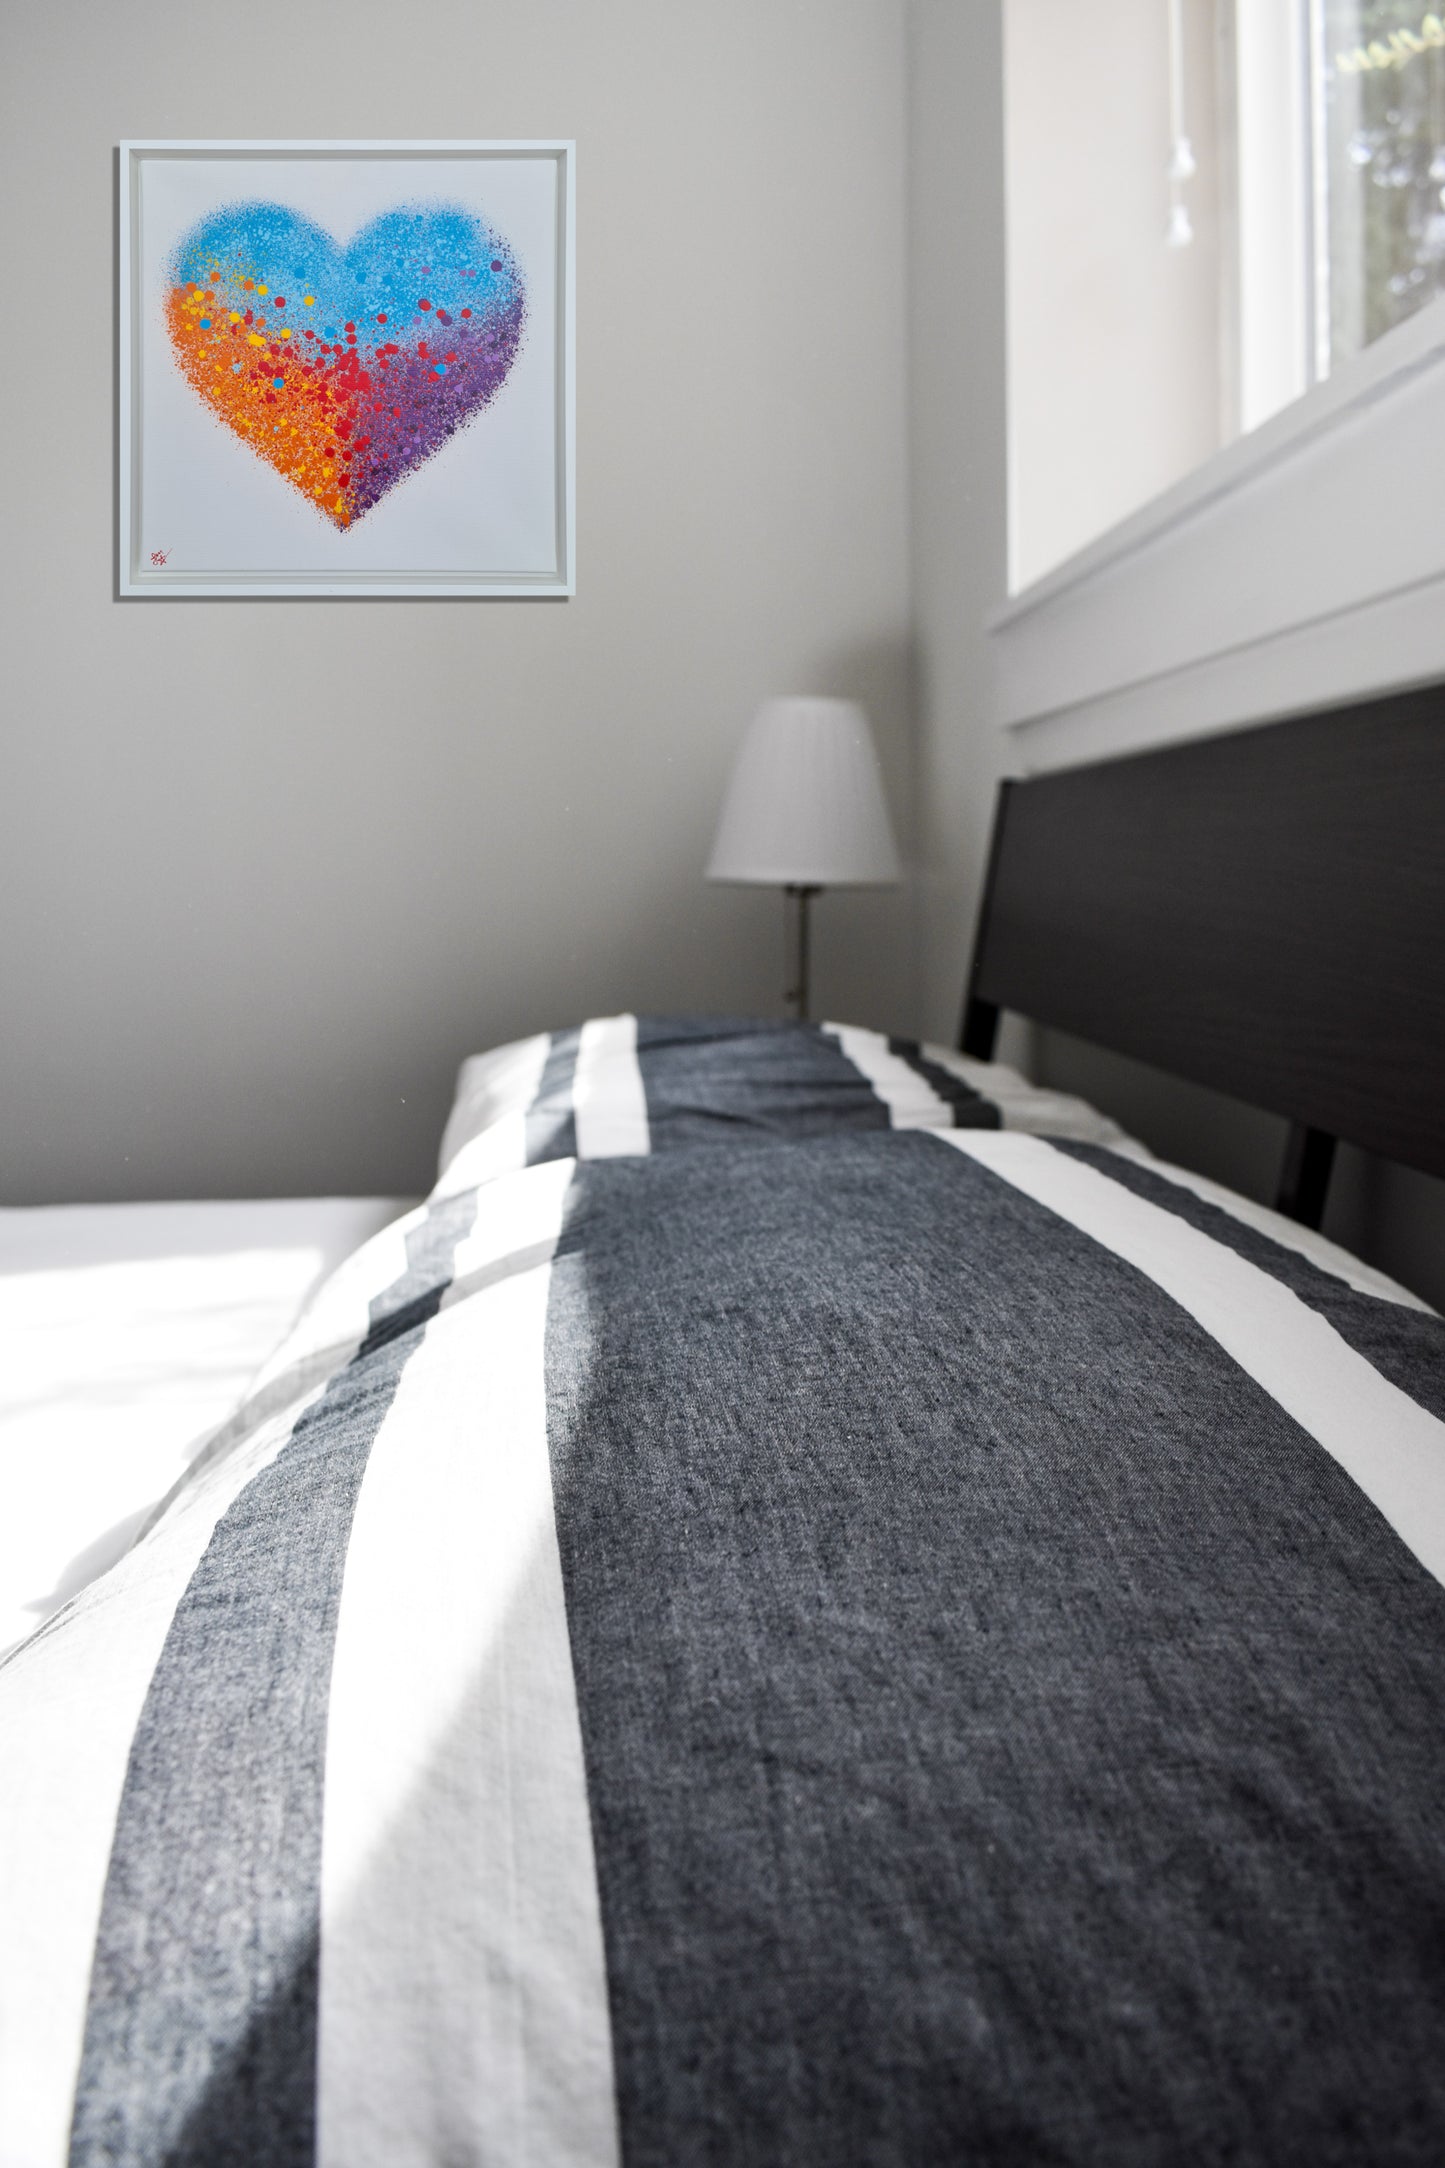 A Vibrant Heart (40 x 40cm)